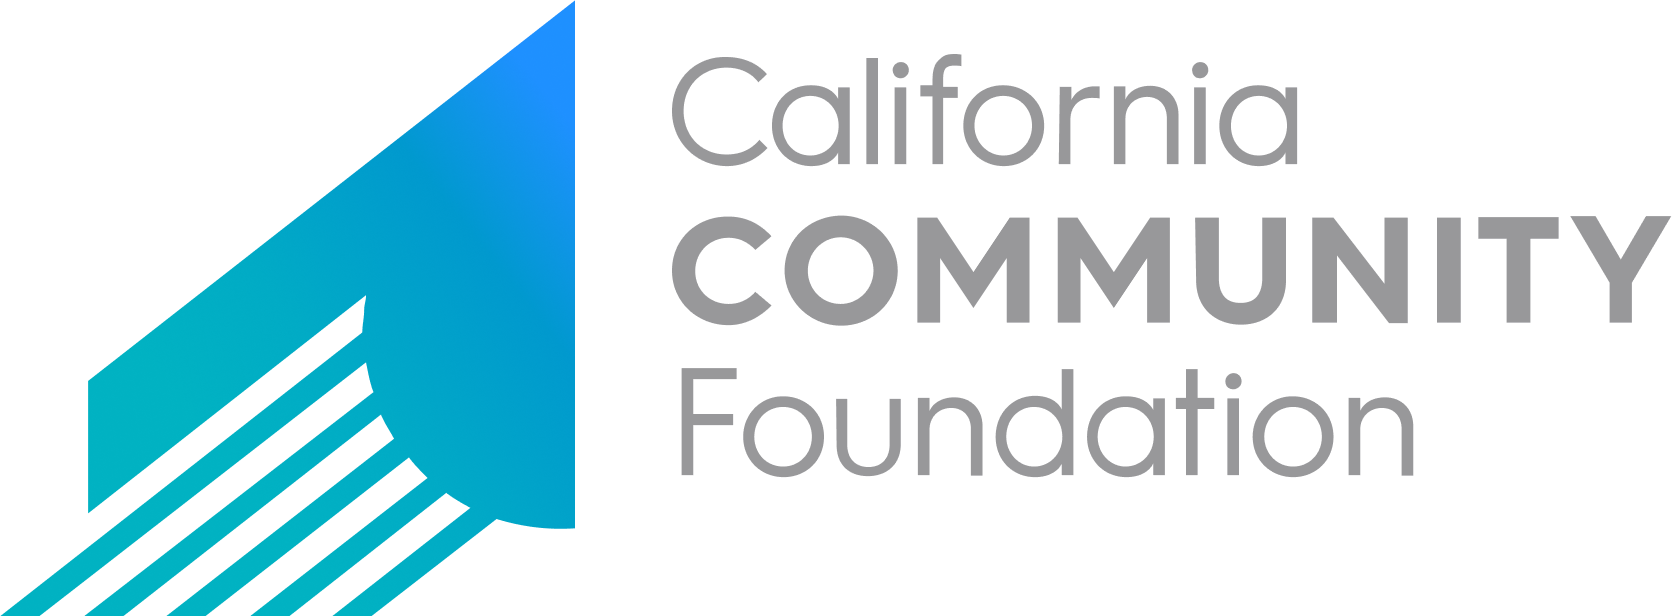 California Community Foundation Special Initiatives Application Portal logo